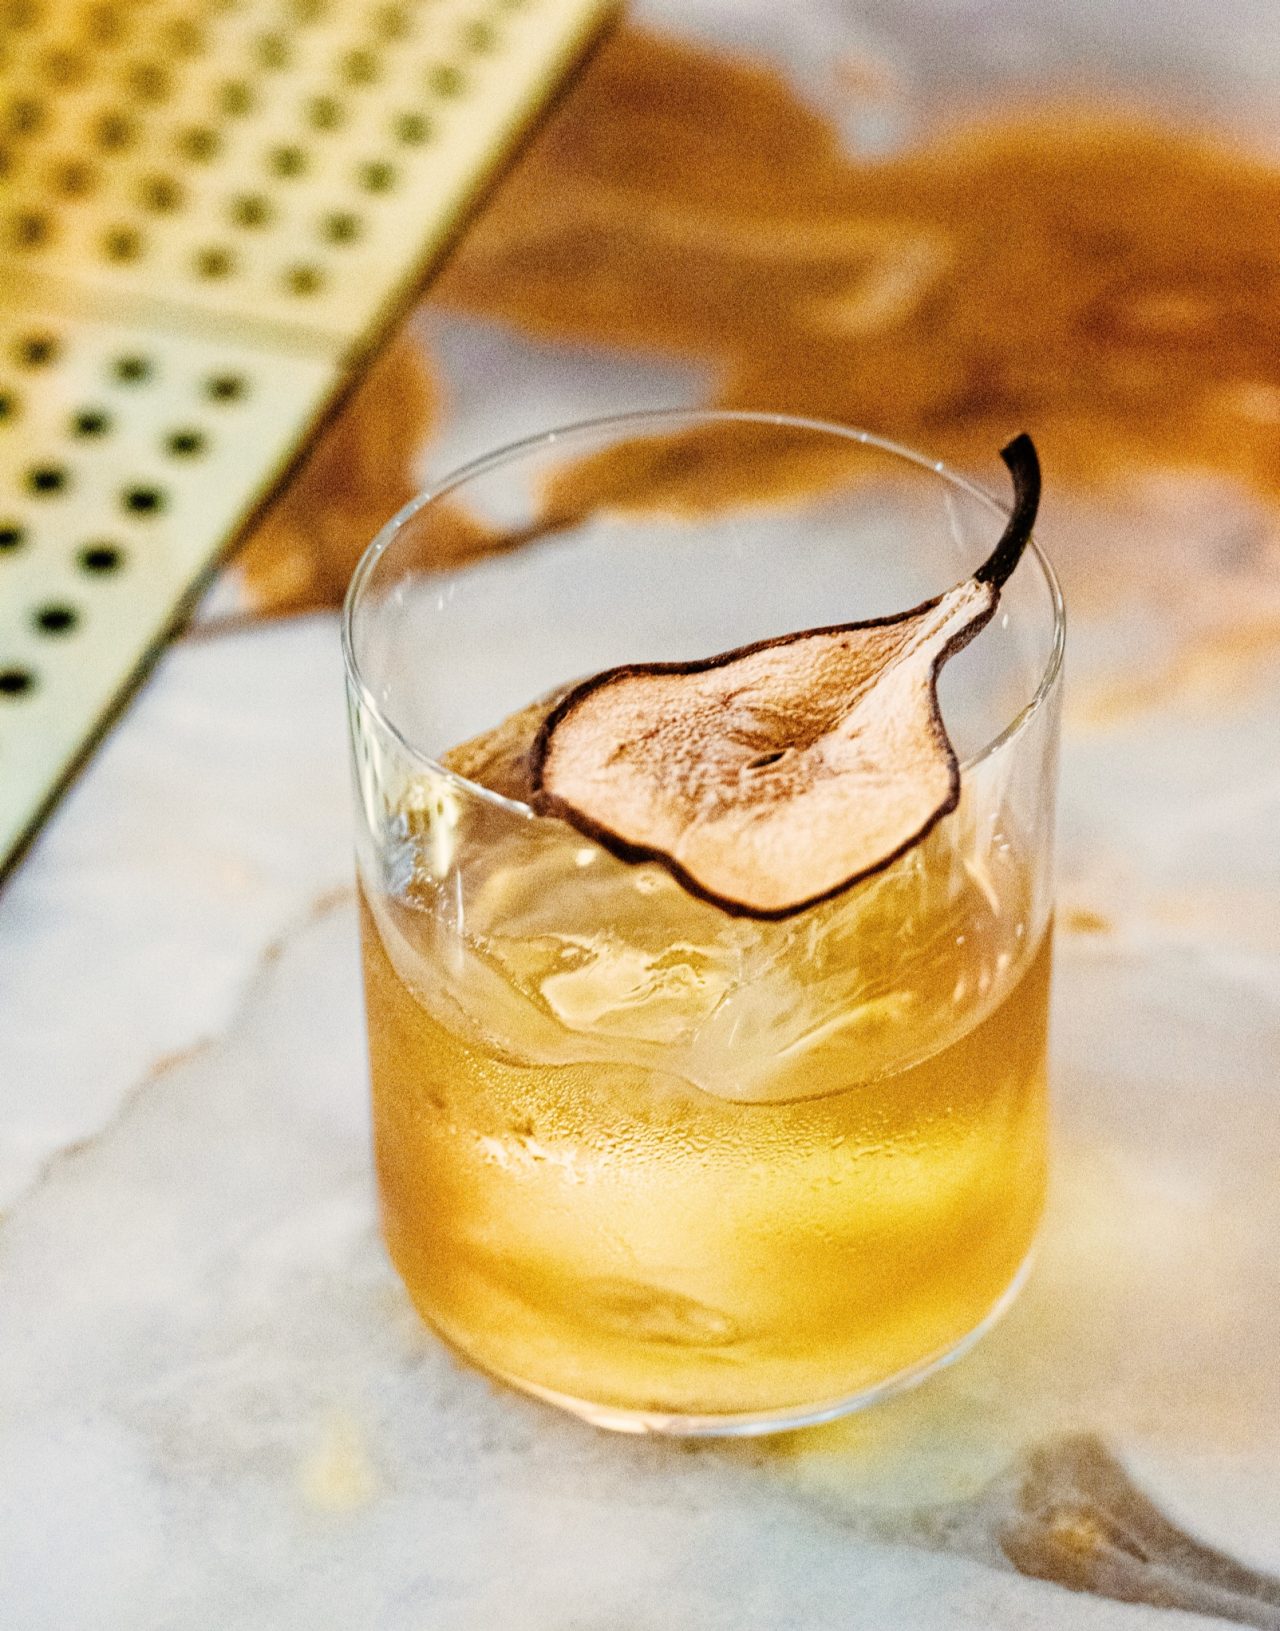 Artisanal cocktail on table with crisp apple slice